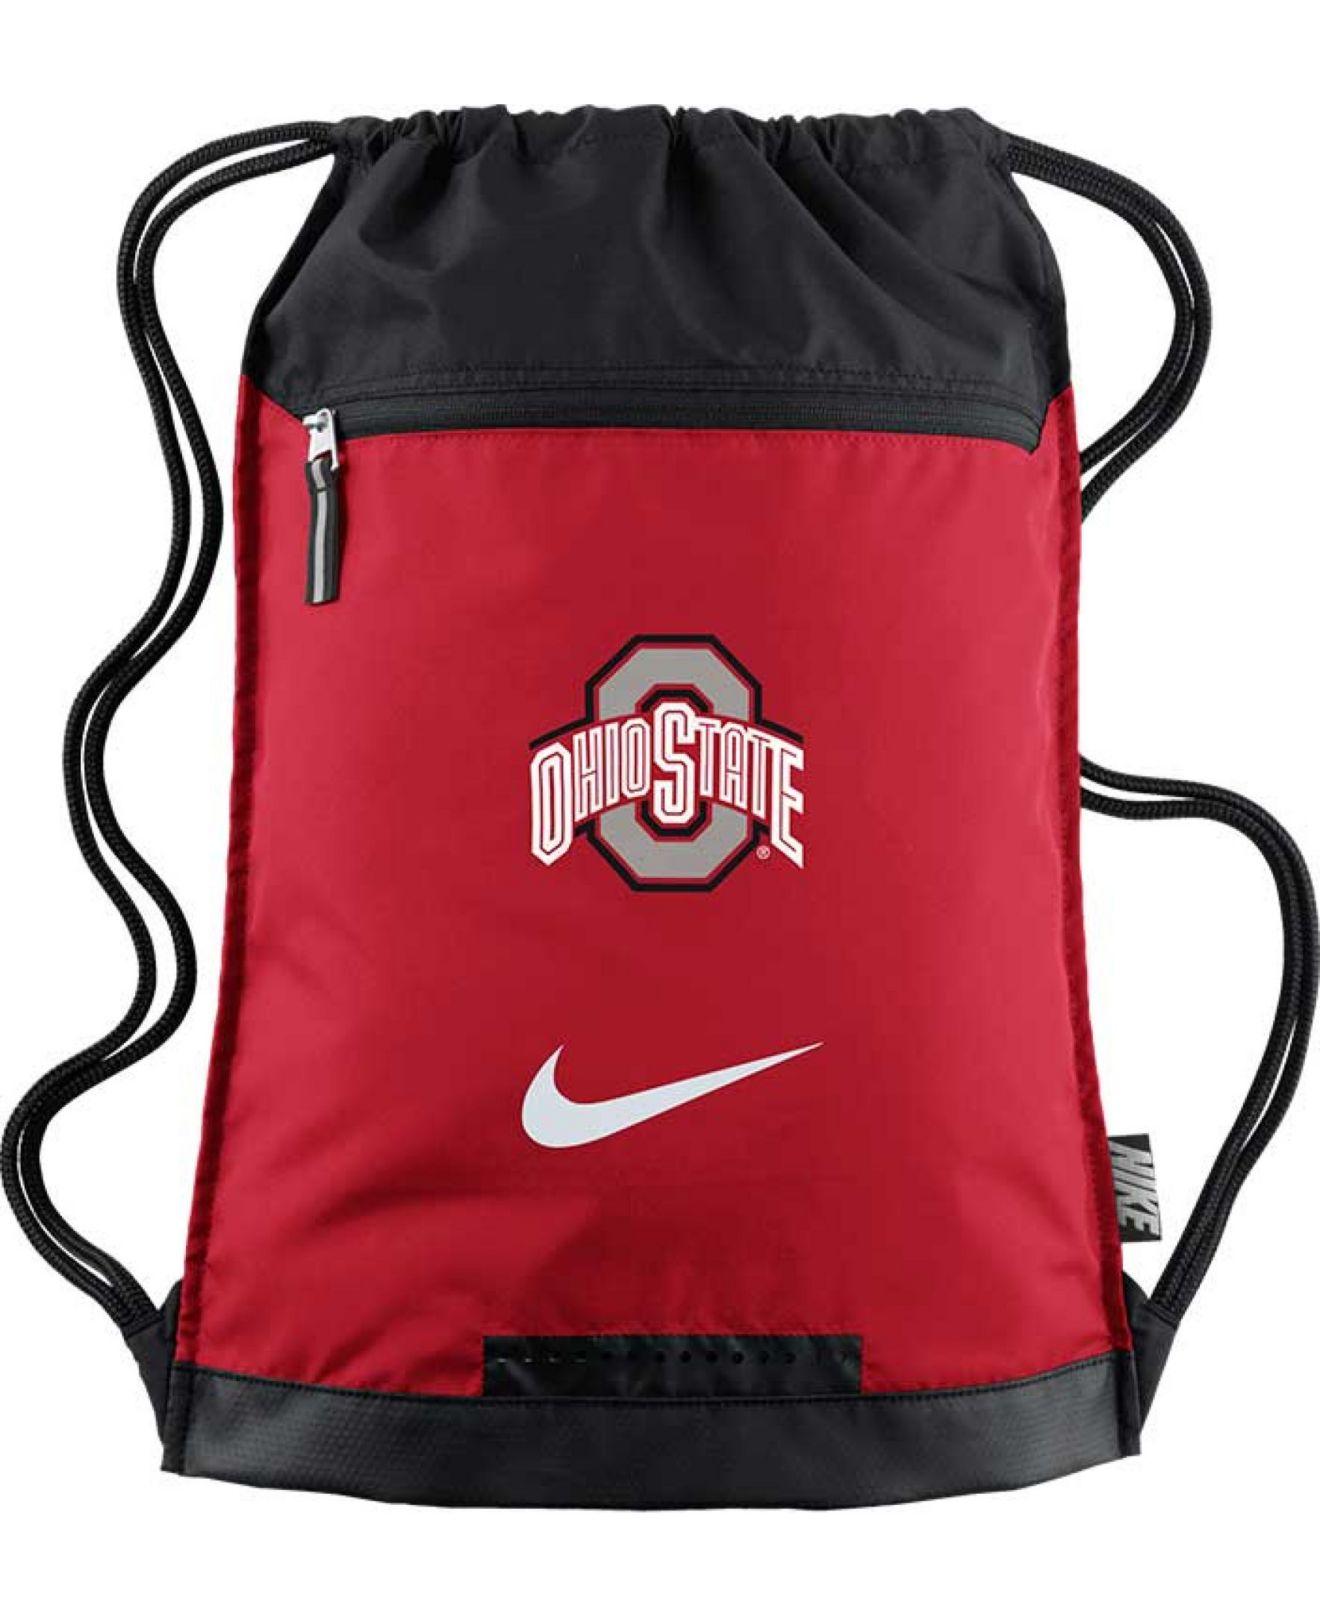 New Ohio State Buckeyes gym bag sack pack/ back pack 